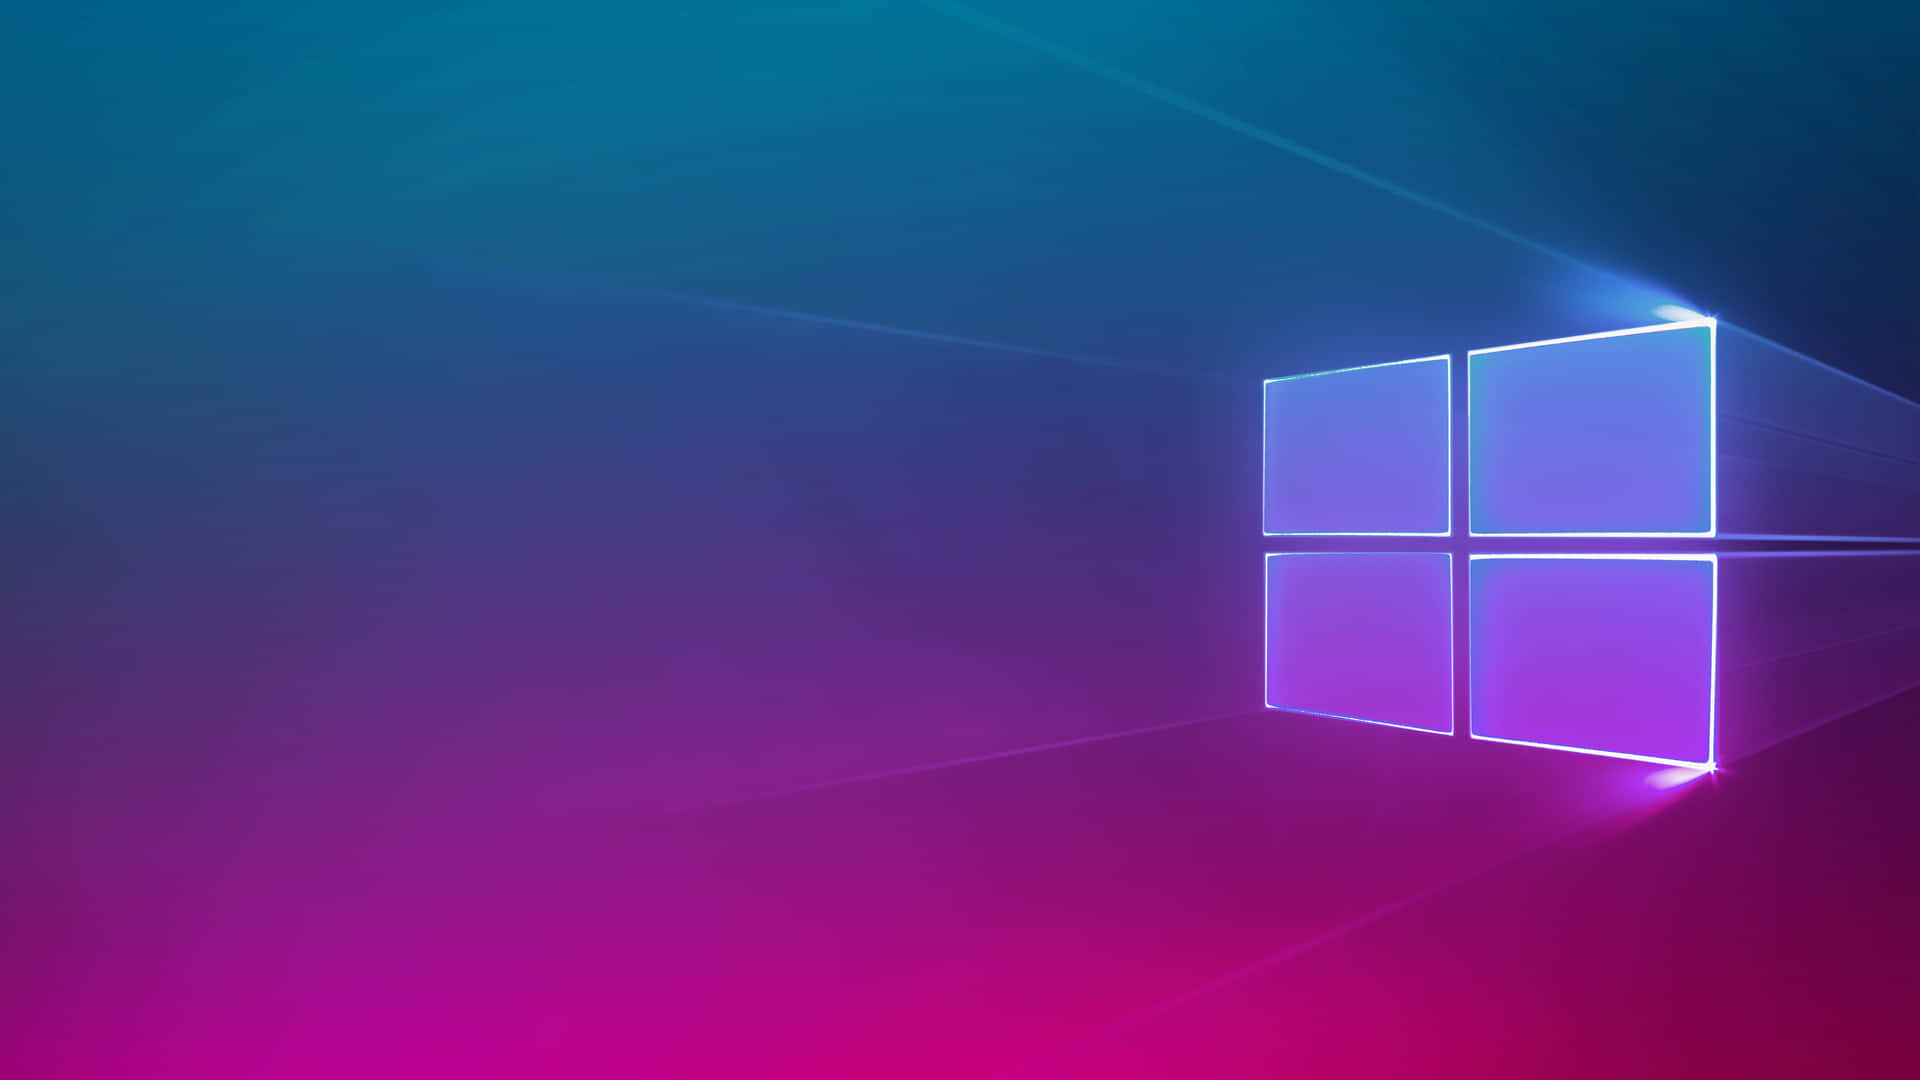 Windows10 Bakgrundsbilder I Hd. Wallpaper